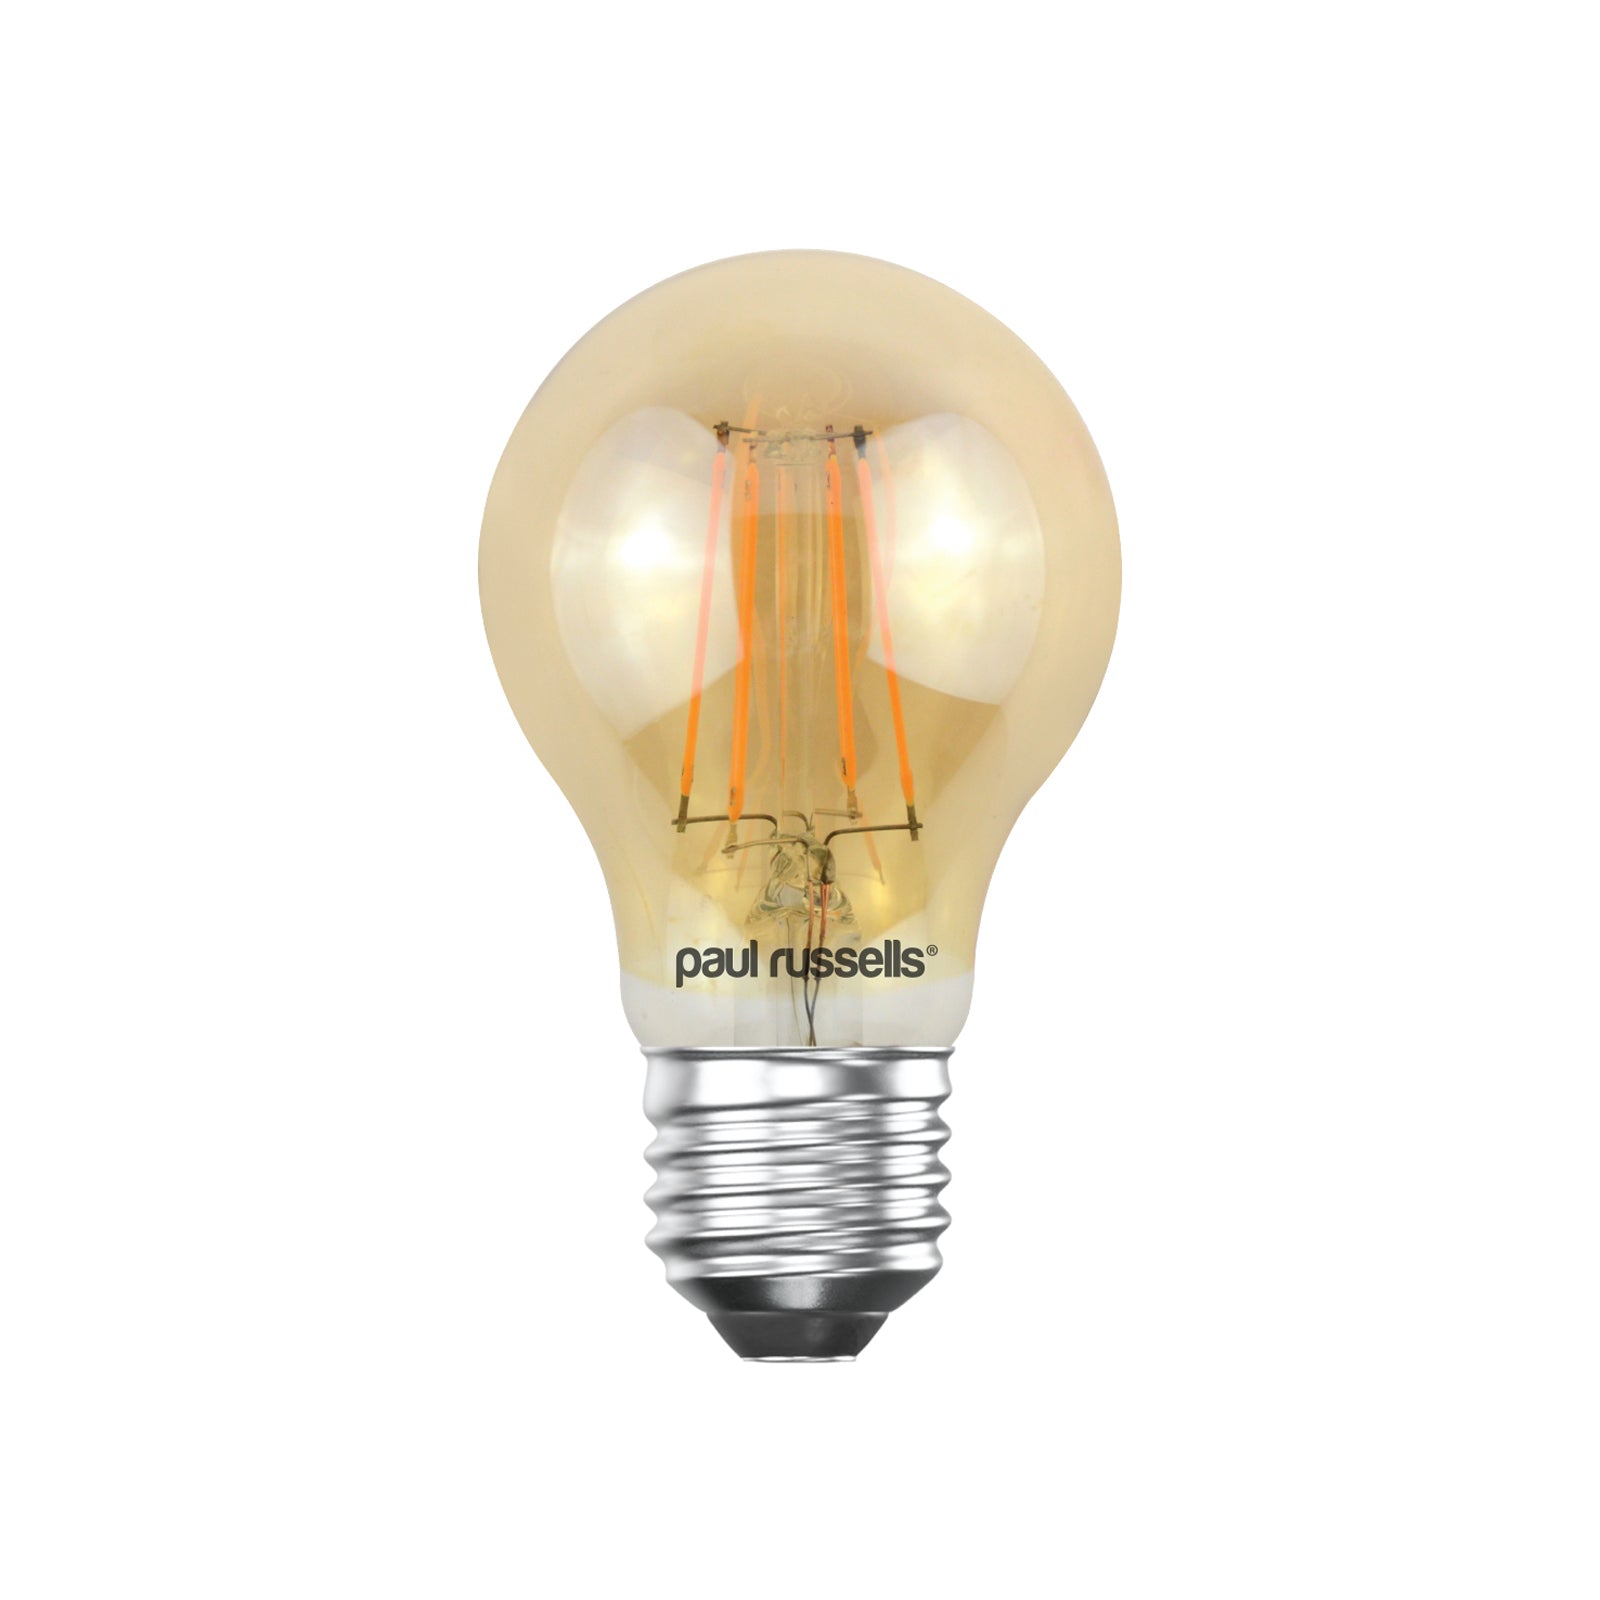 LED Filament GLS 7W (50w), ES/E27, 680 Lumens, Extra Warm White(2200K), 240V